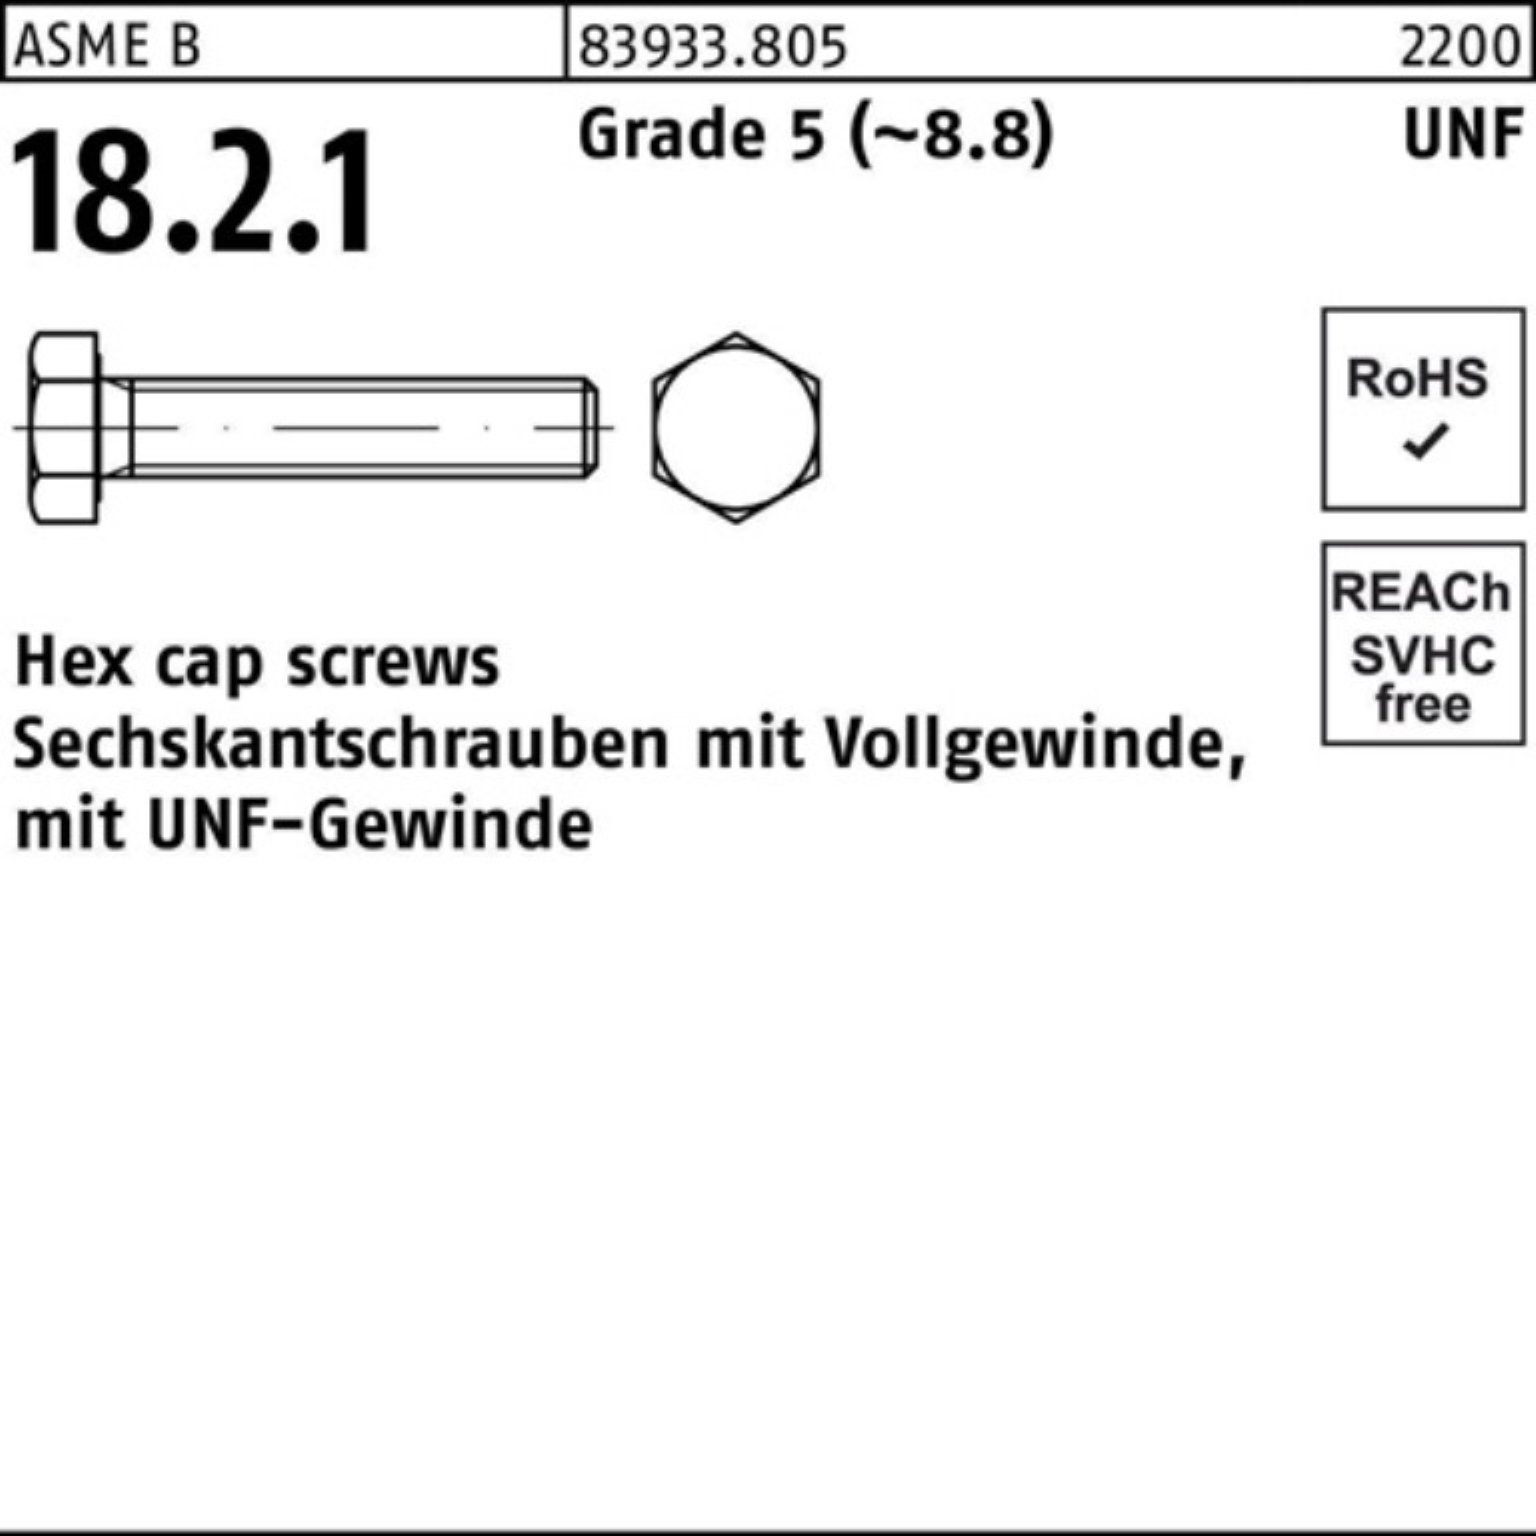 Reyher Sechskantschraube 100er Pack Sechskantschraube R 83933 UNF-Gewinde VG 3/8x 7/8 Grade 5